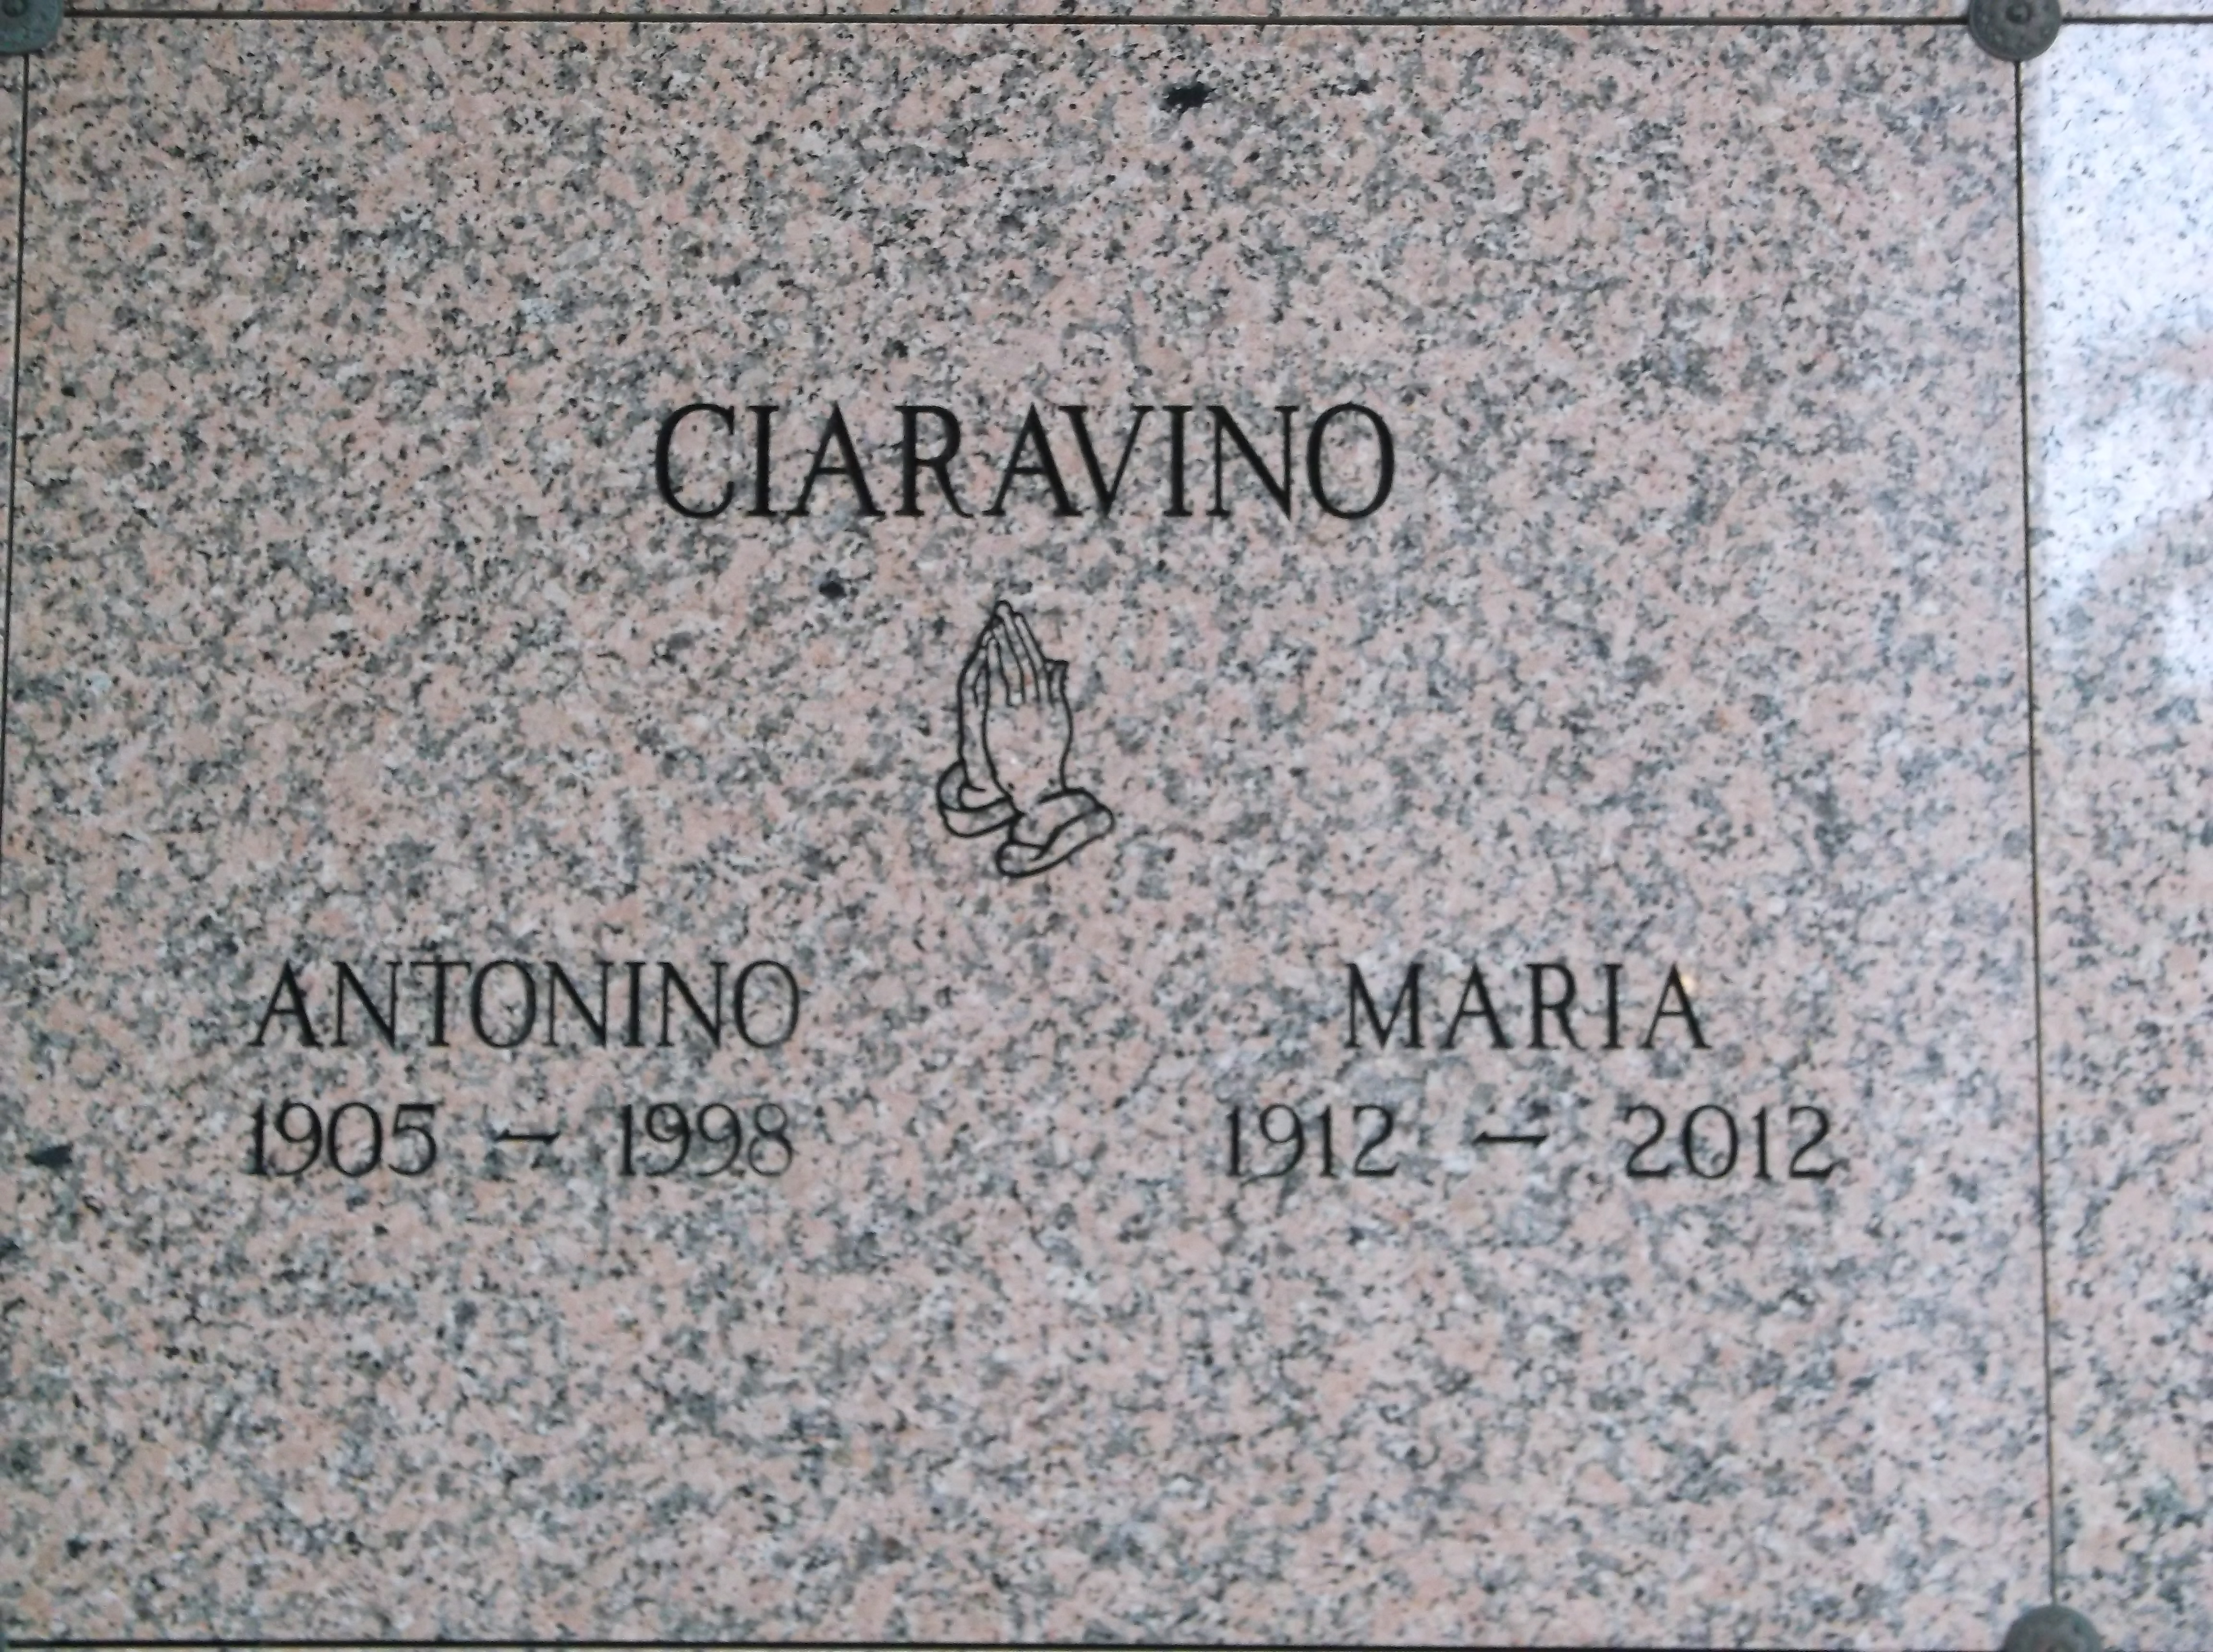 Maria Ciaravino